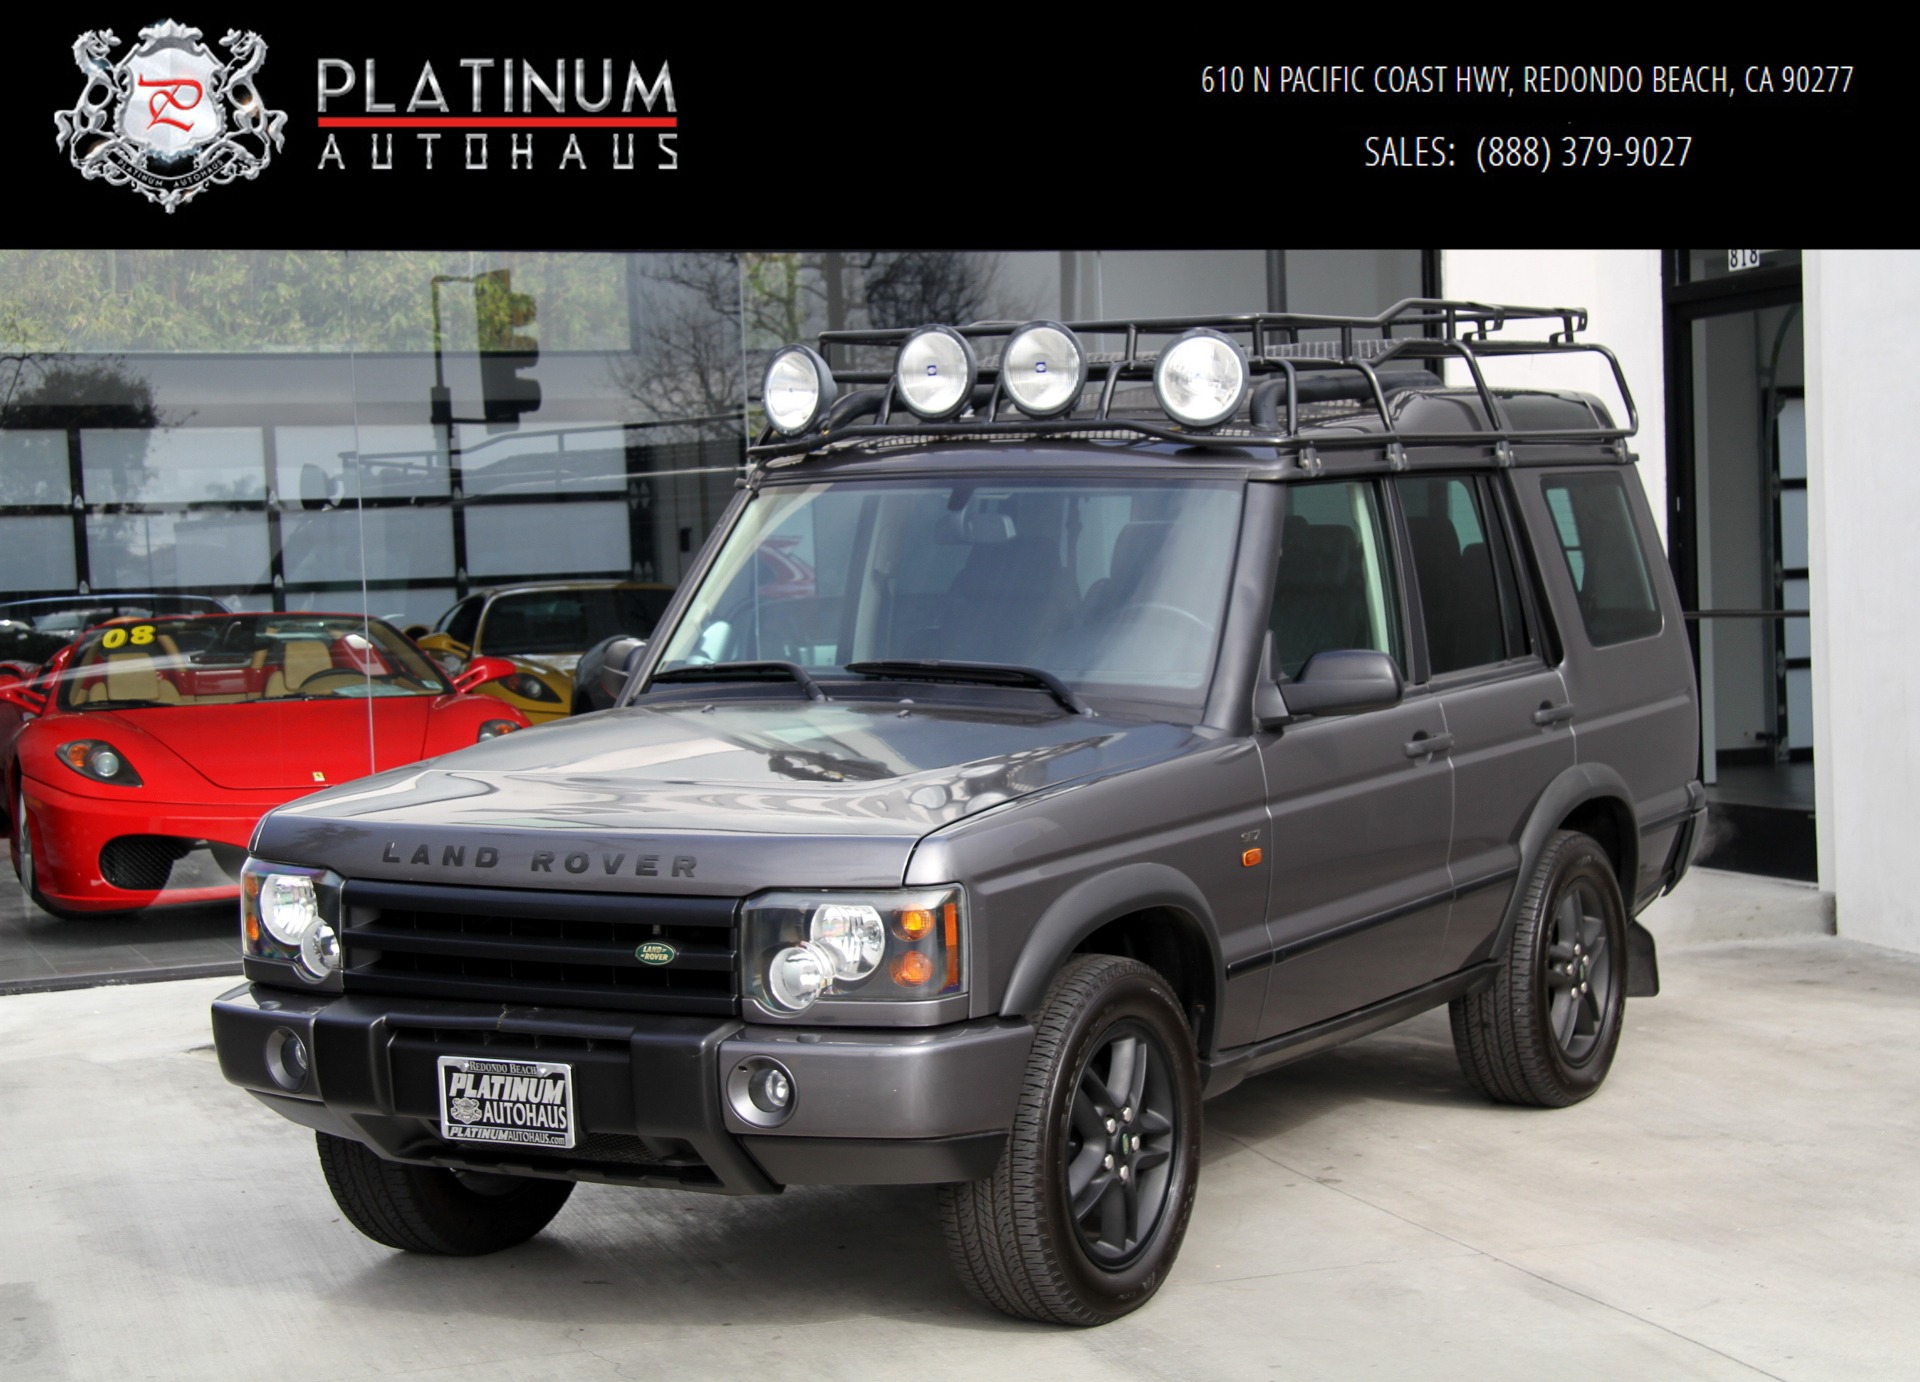 2004 Land Rover Discovery Ii Se7 Stock 856998 For Sale Near Redondo Beach Ca Ca Land Rover Dealer